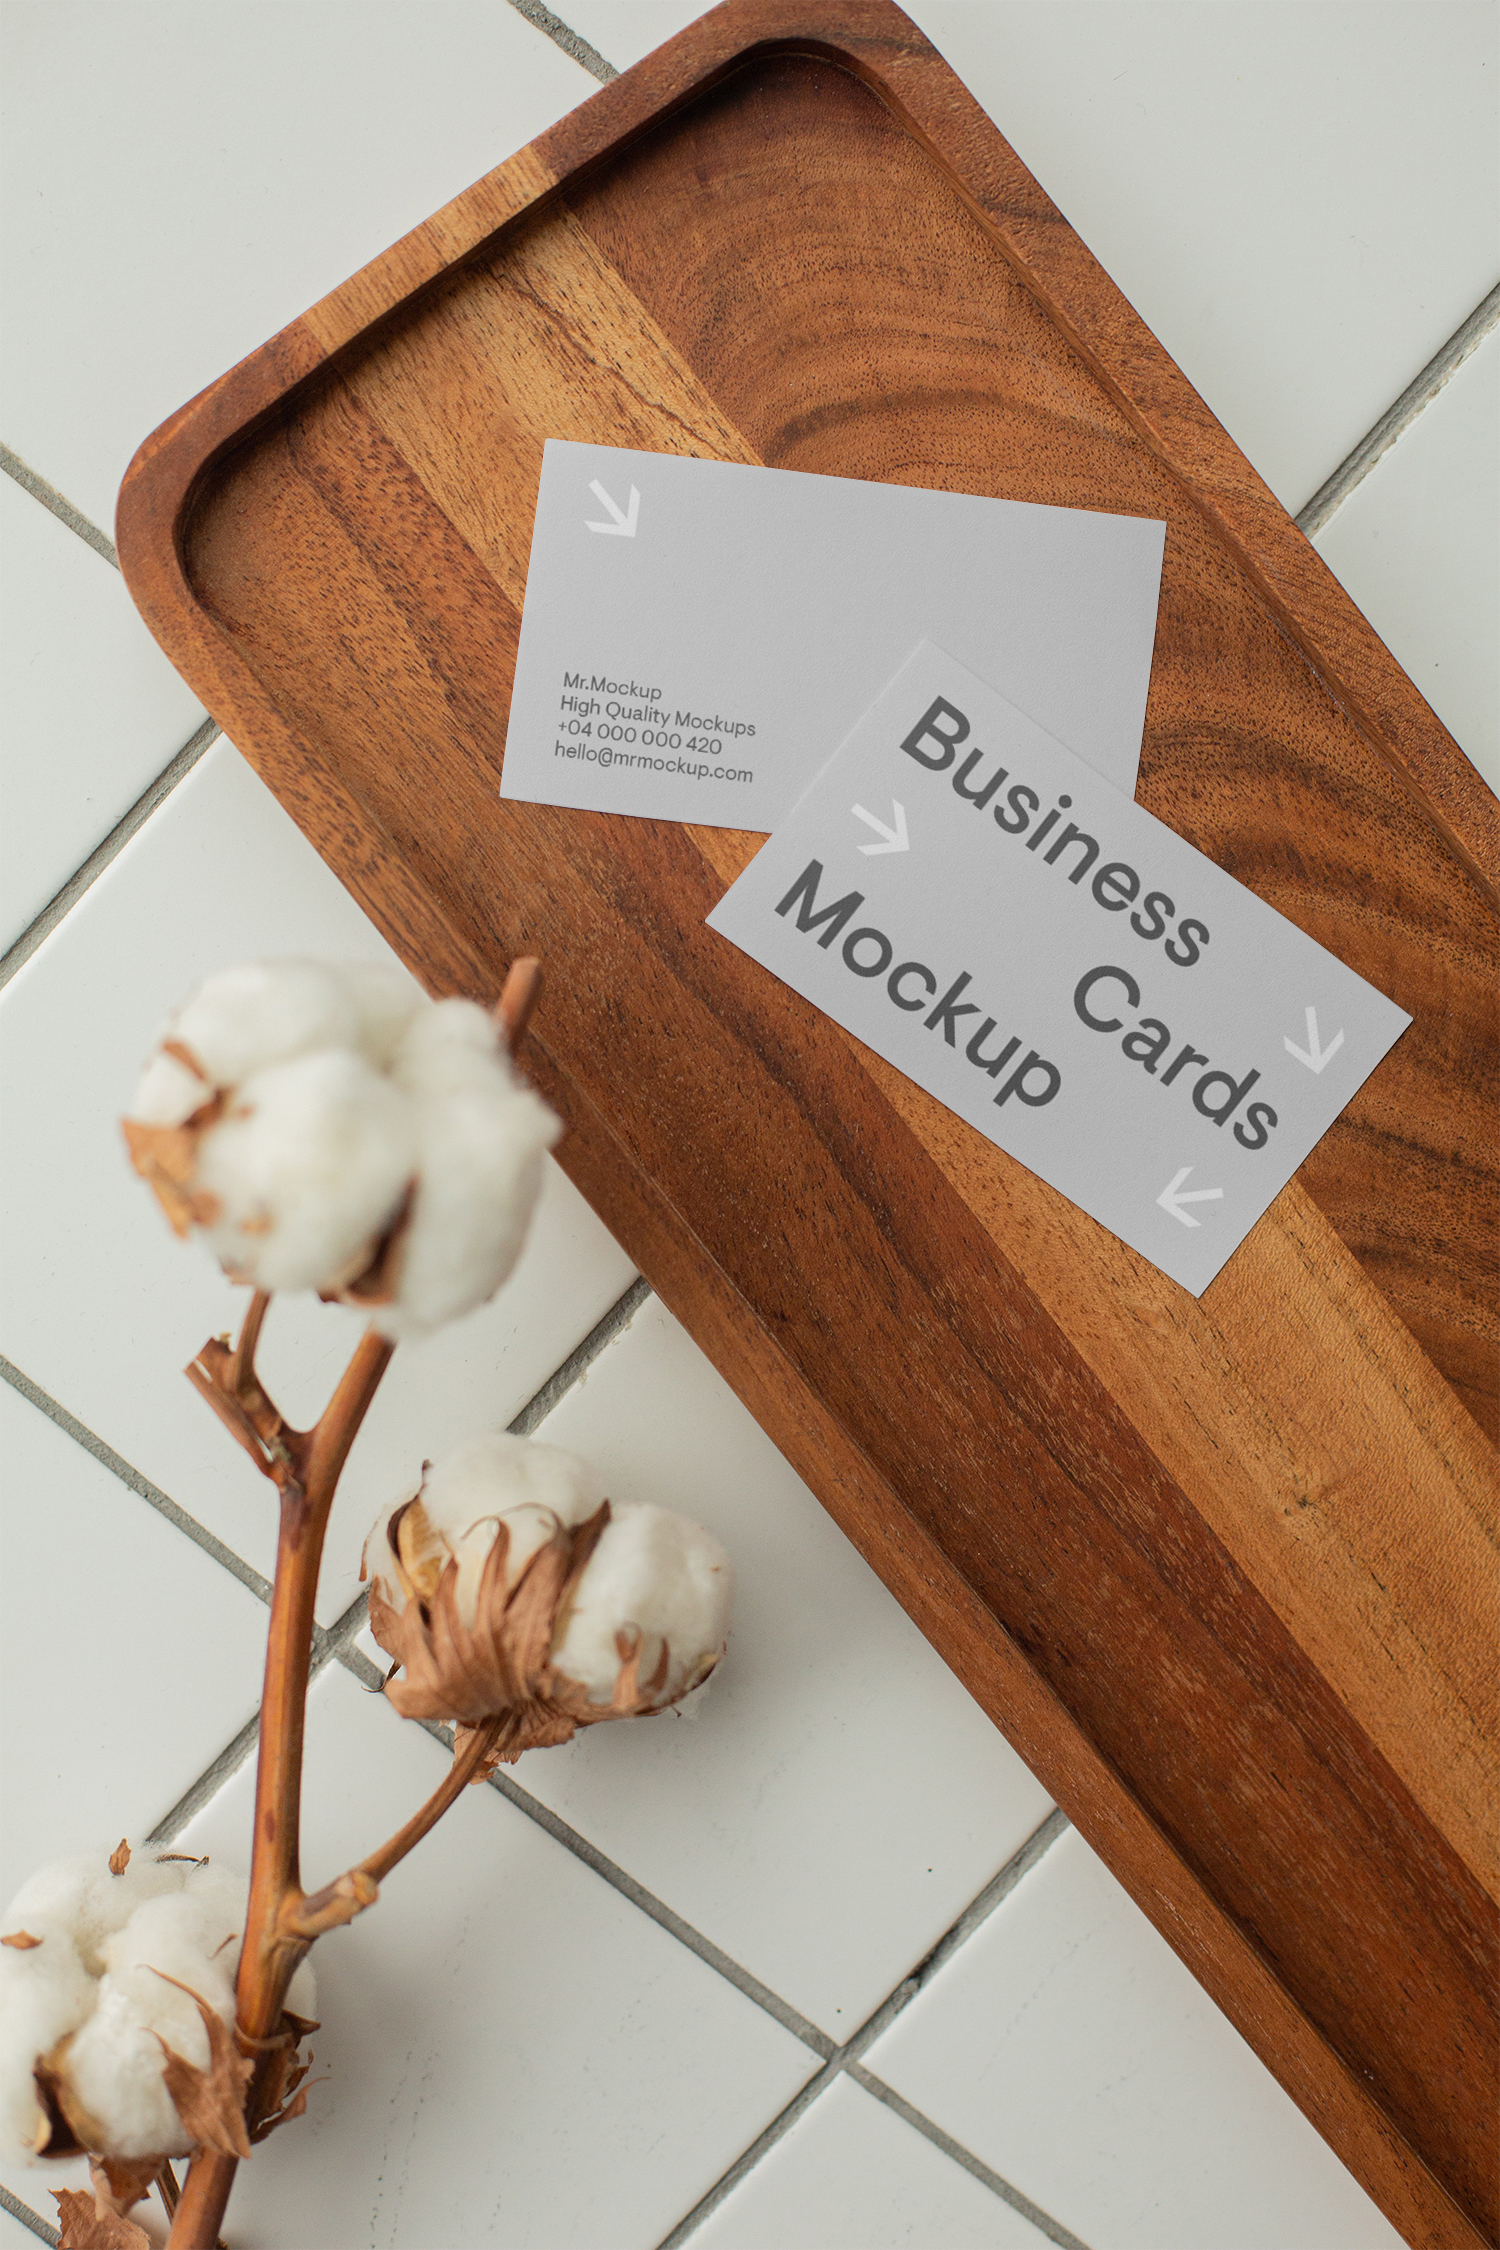 Business Card on Wood Table Mockup